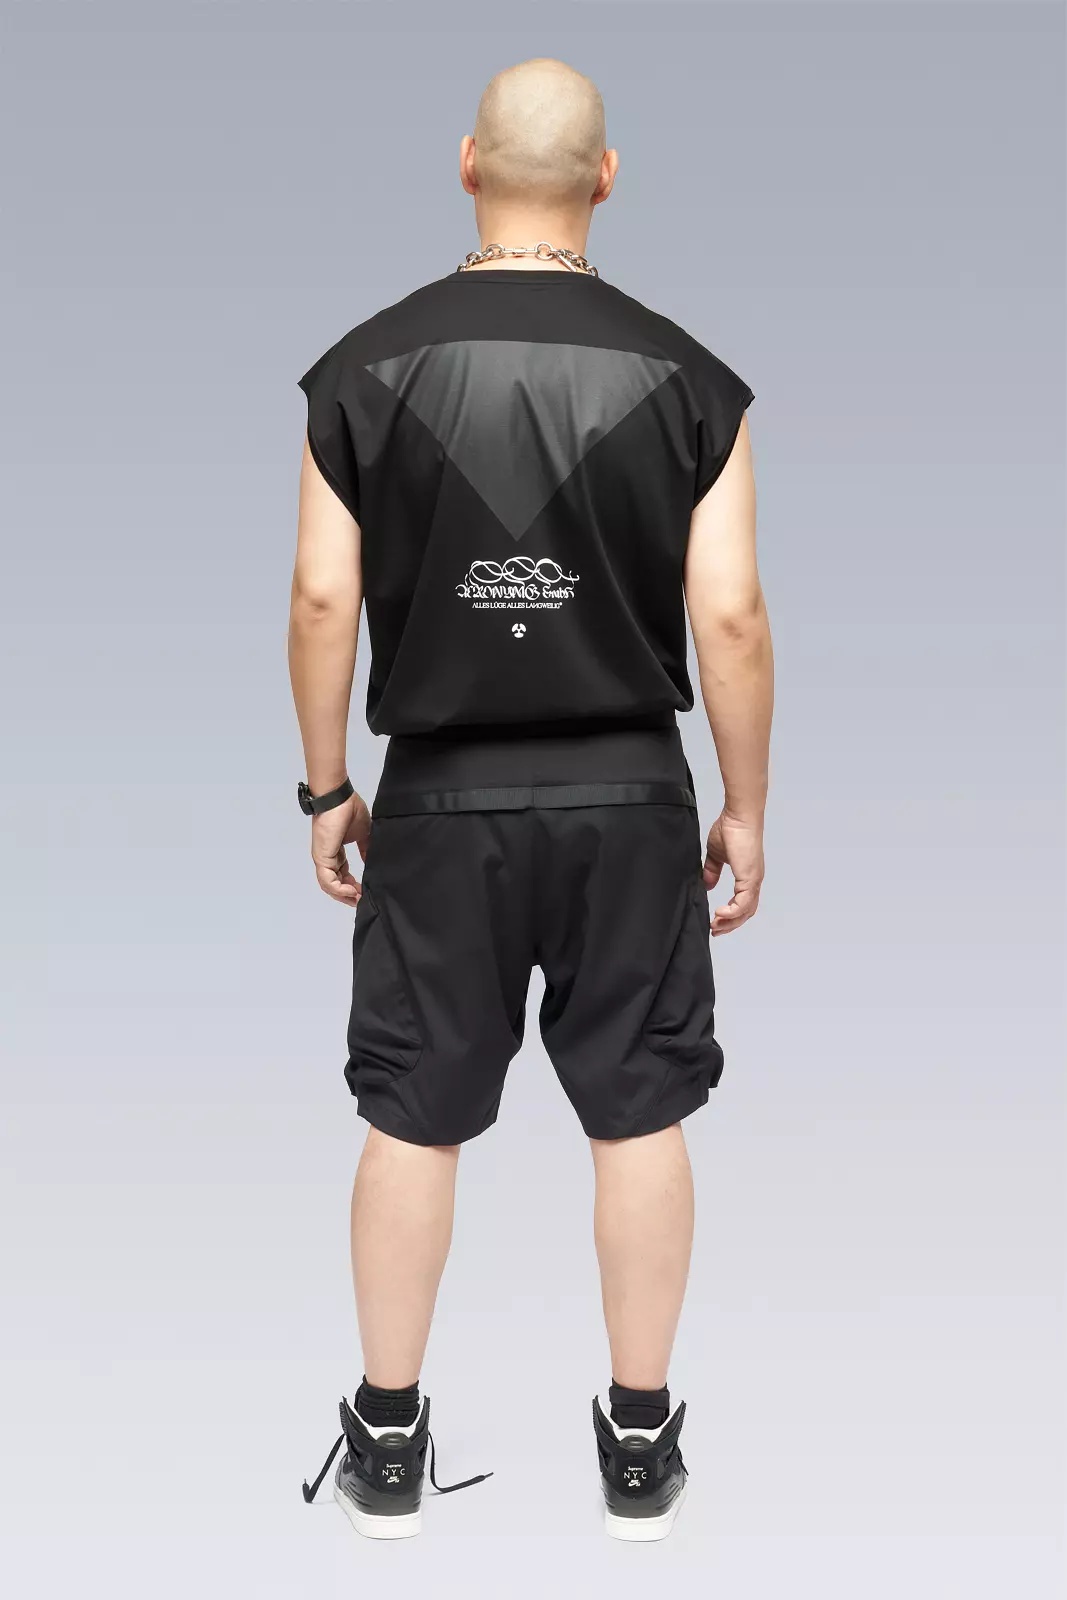 S25-PR-A 100% Cotton Mercerized Sleeveless T-shirt Black - 3